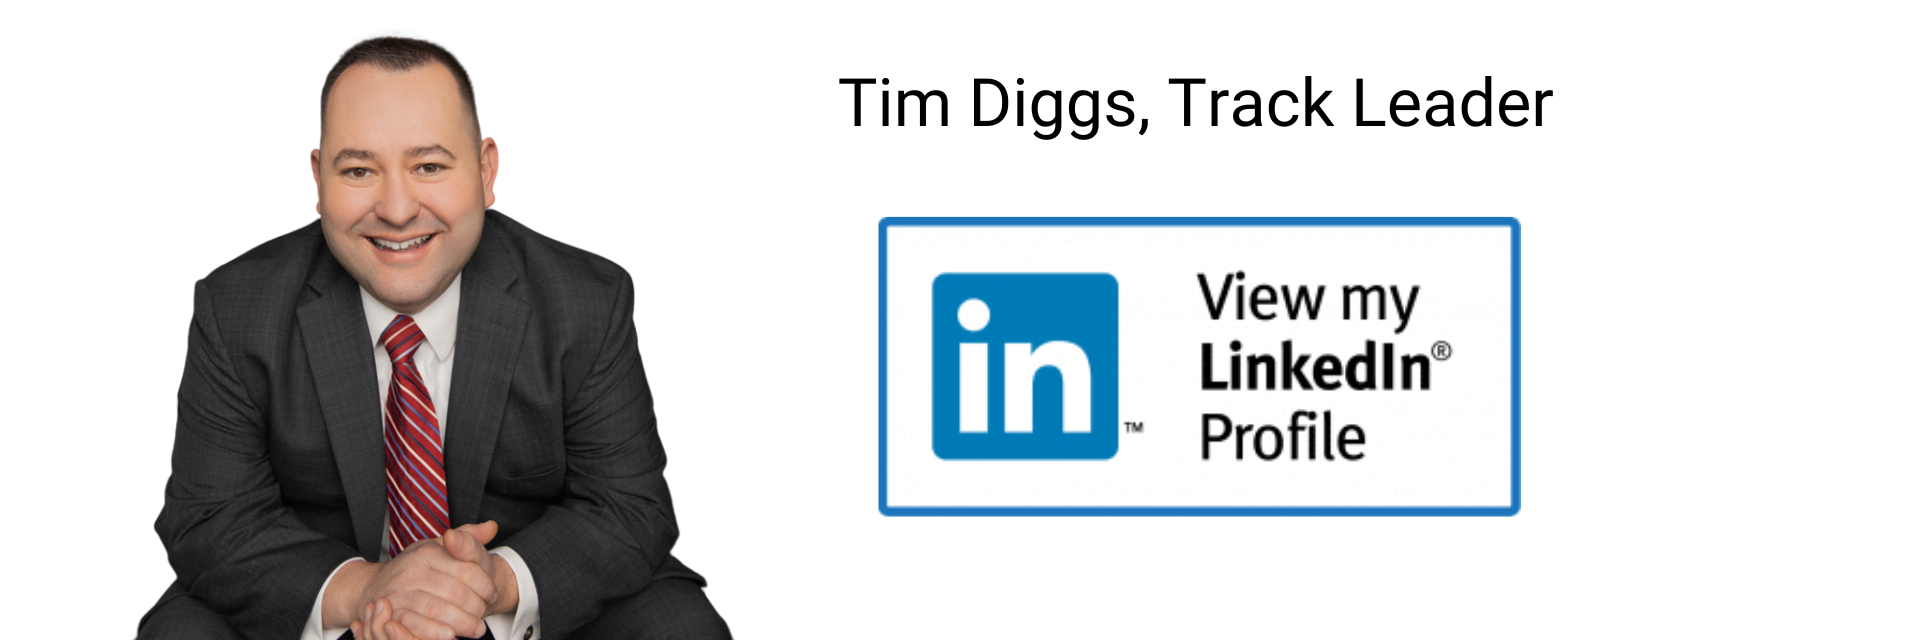 Tim Diggs Track Leader